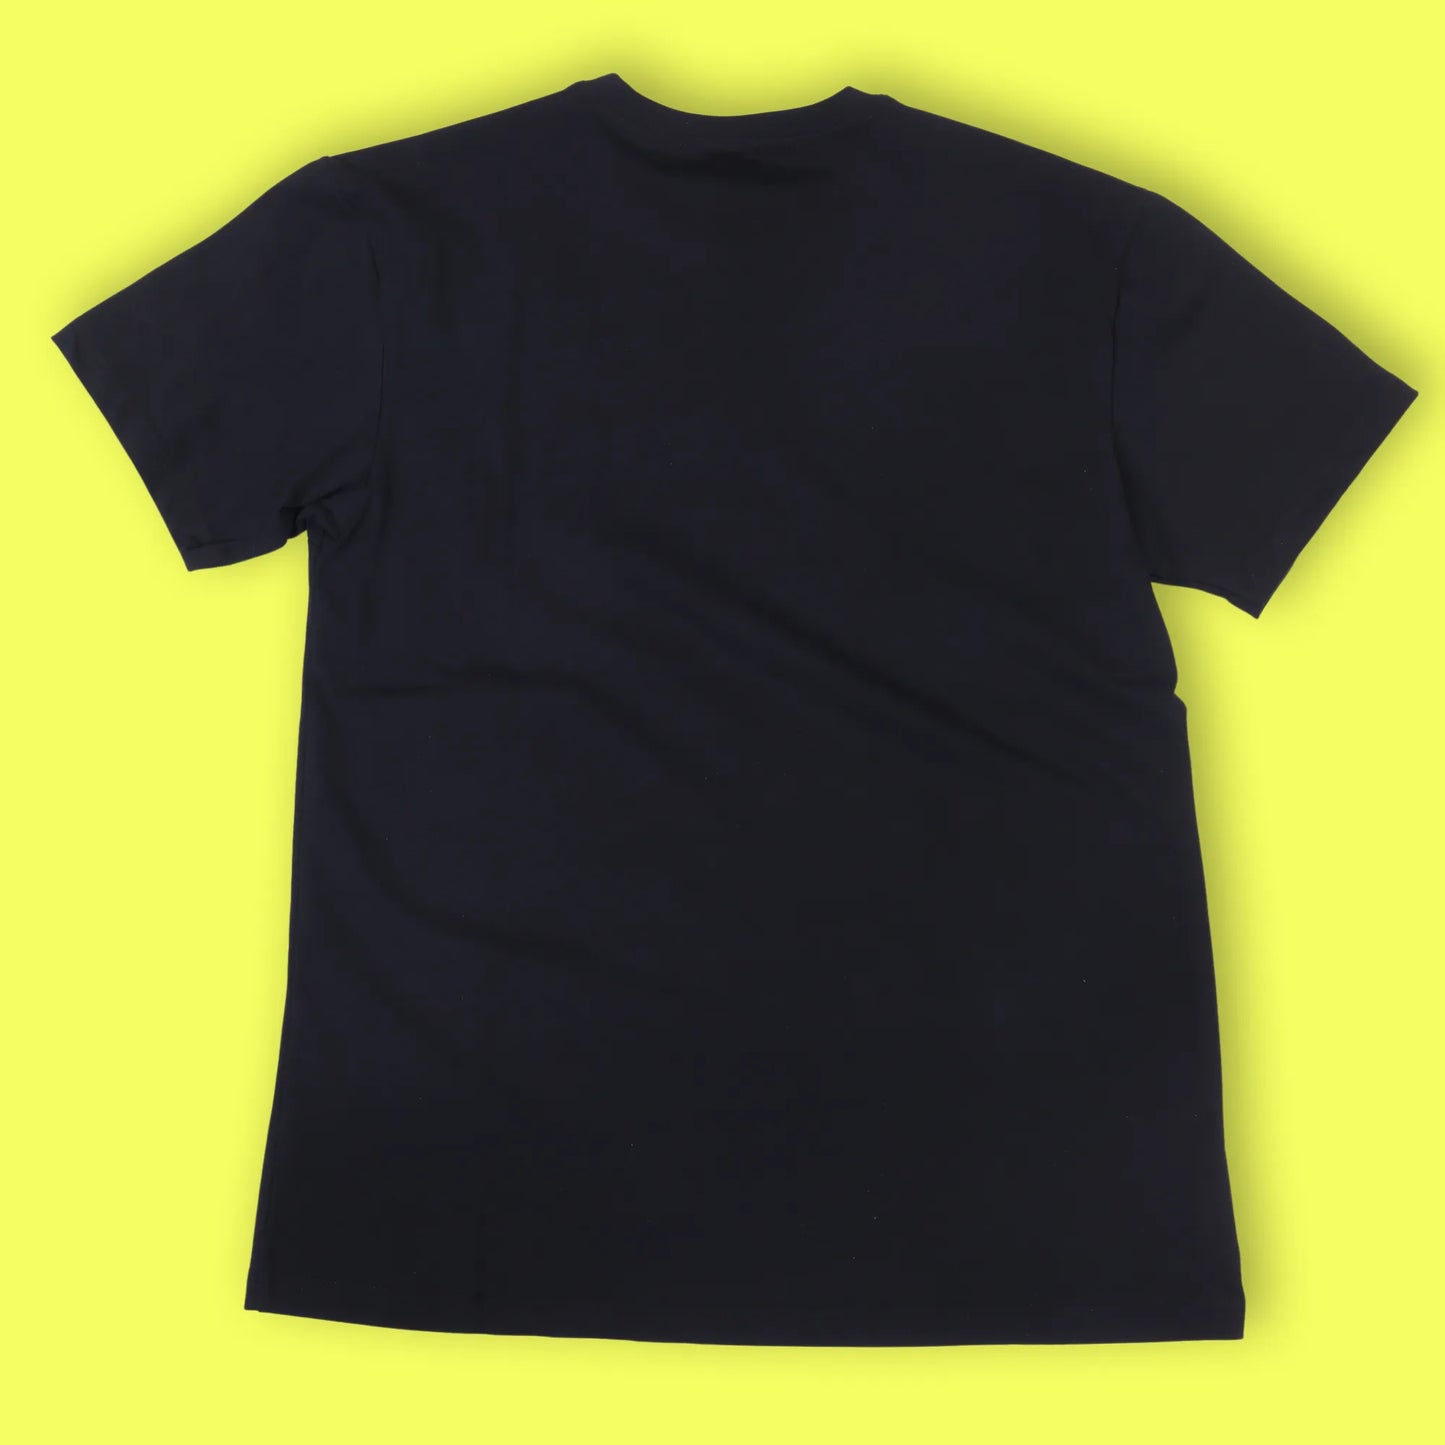 Slime Drips T-shirt